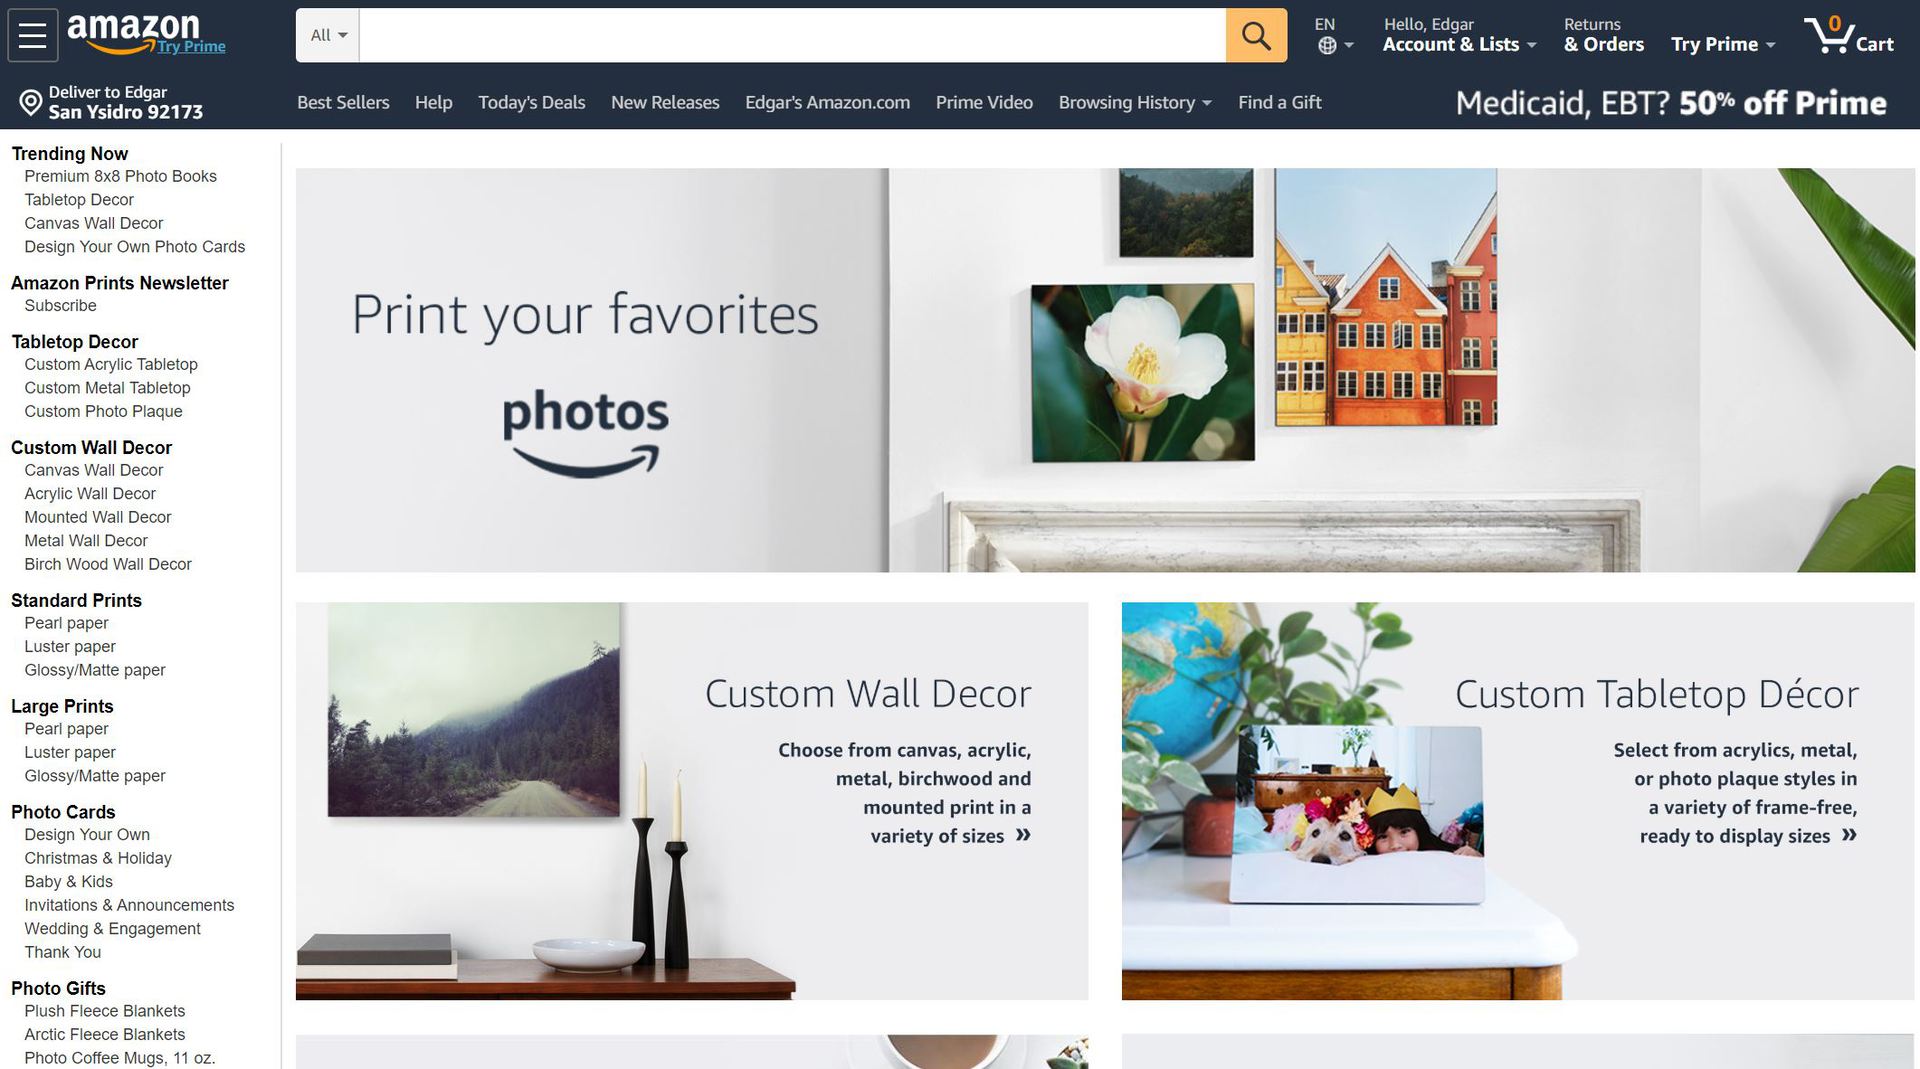 Amazon Prints online photo printing services 1